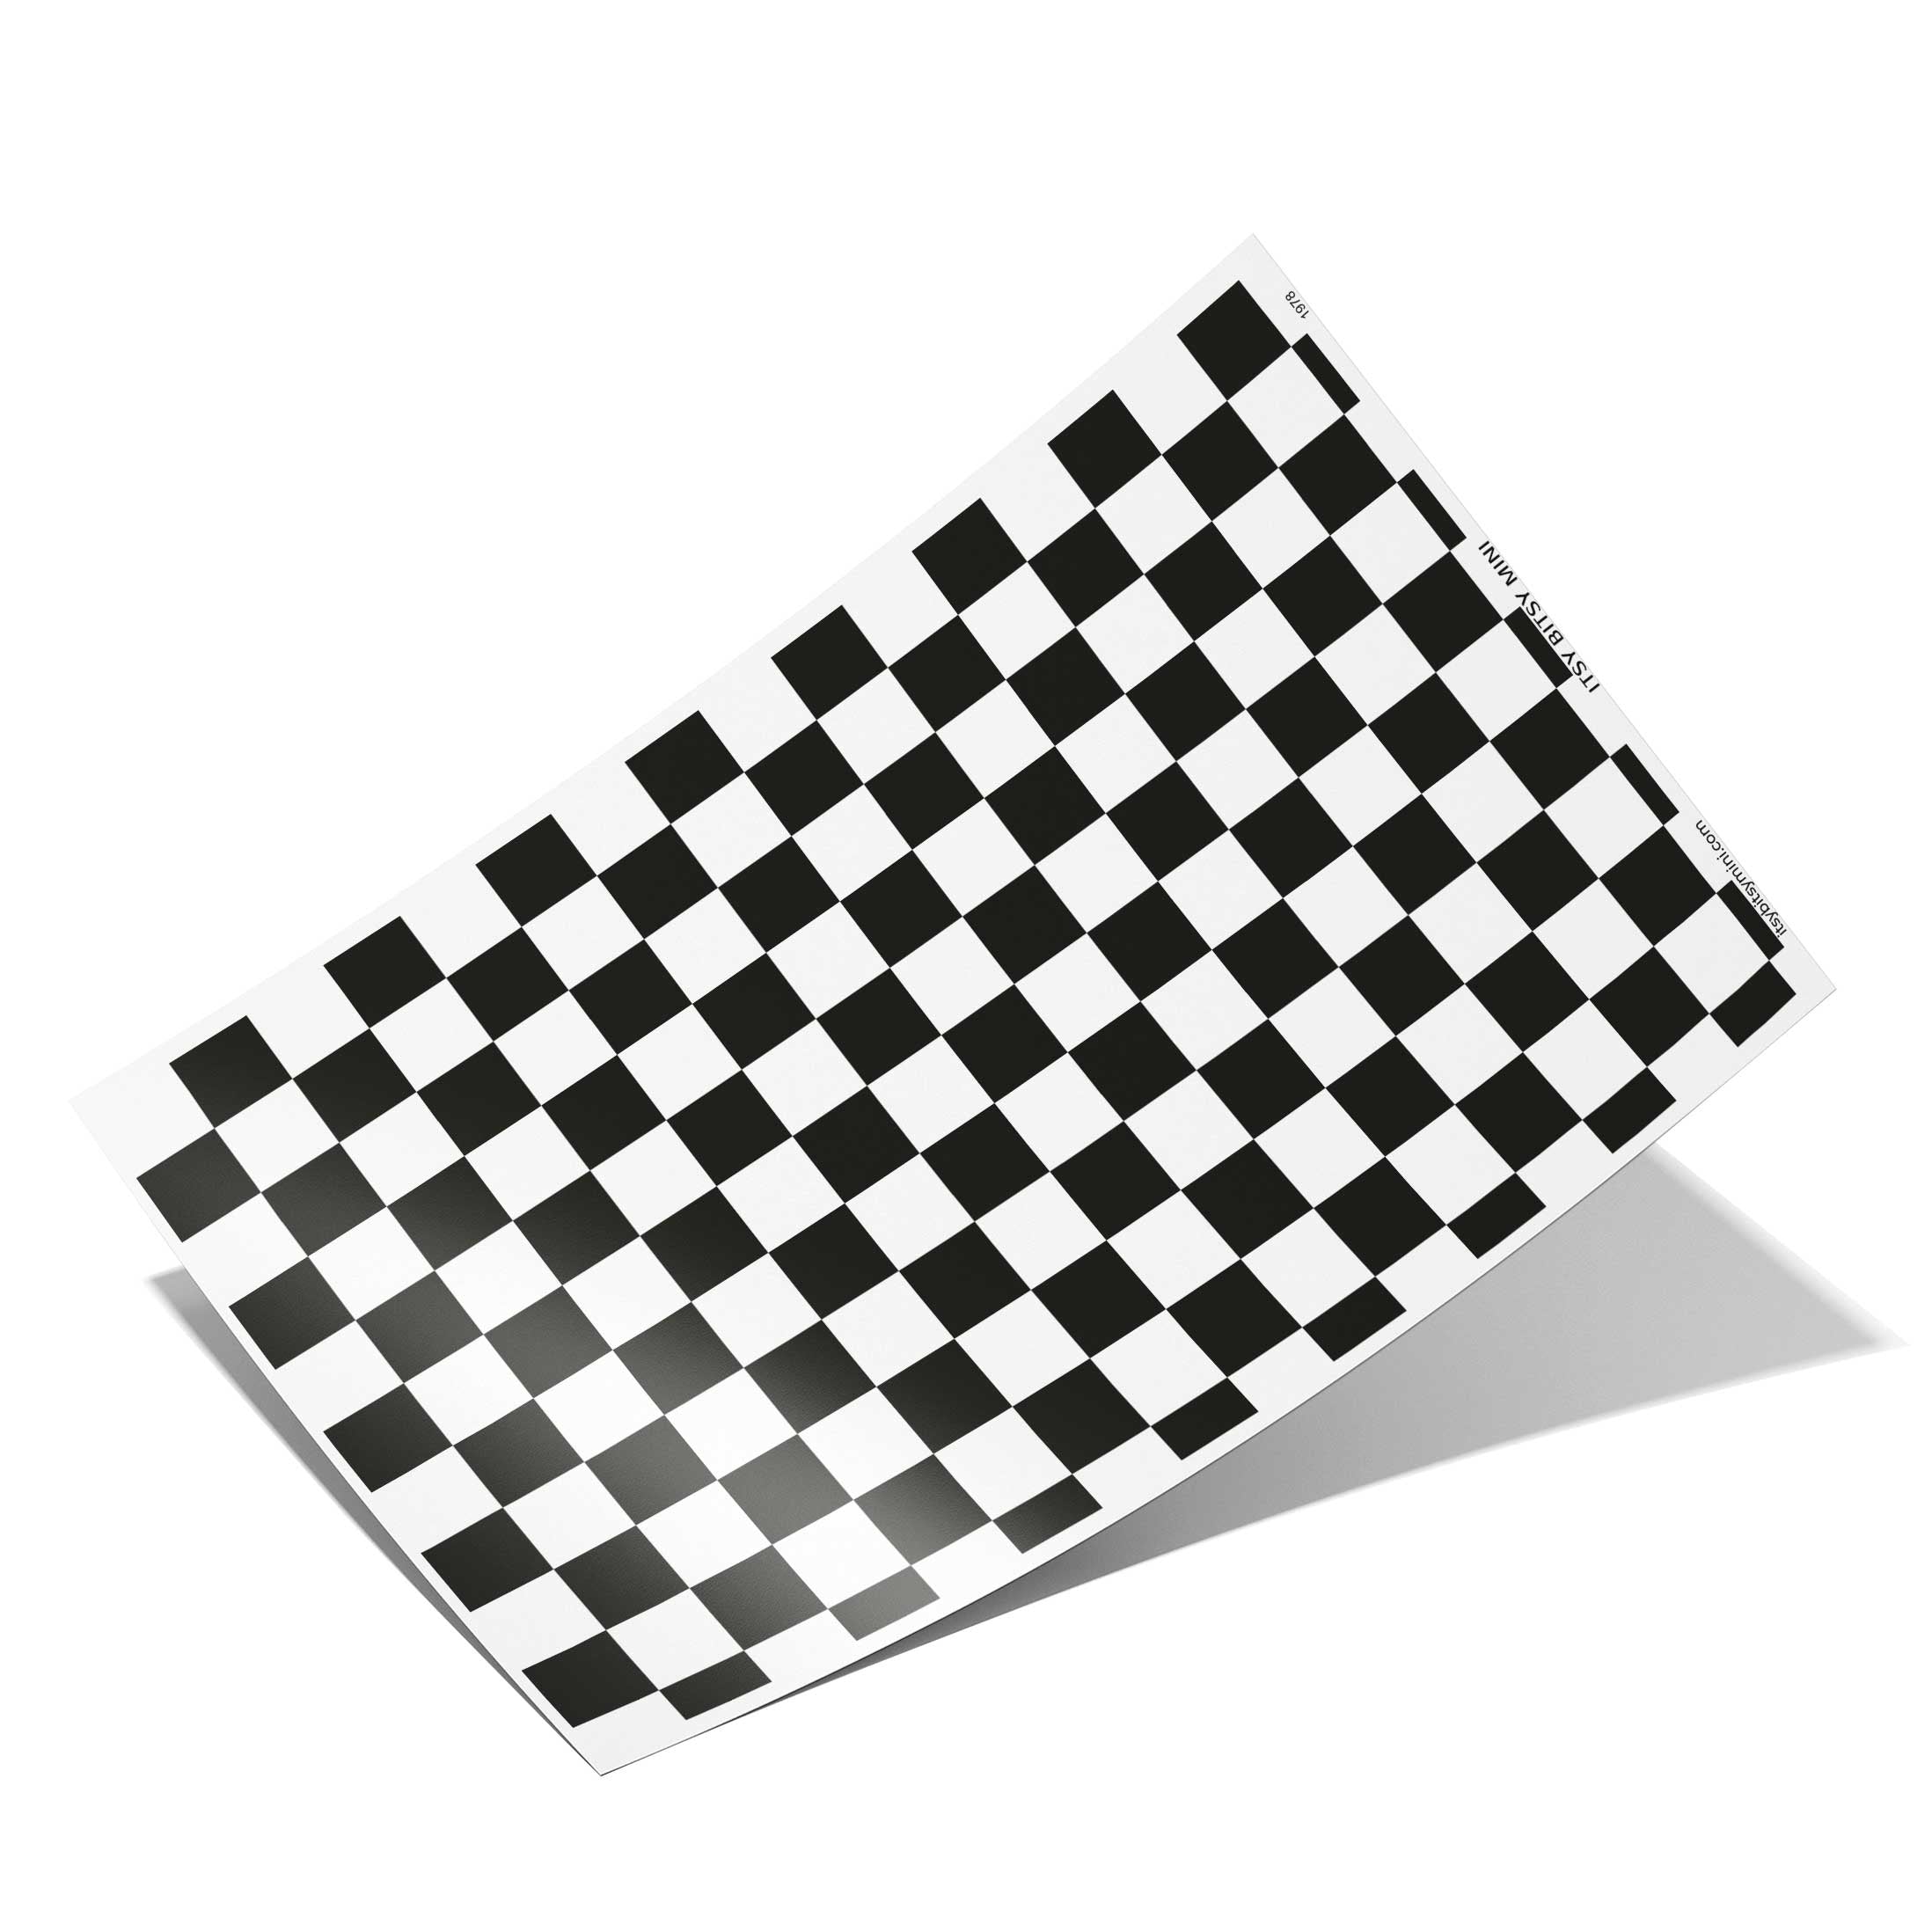 Black and White Check Tile - Large - Dollhouse Wallpaper